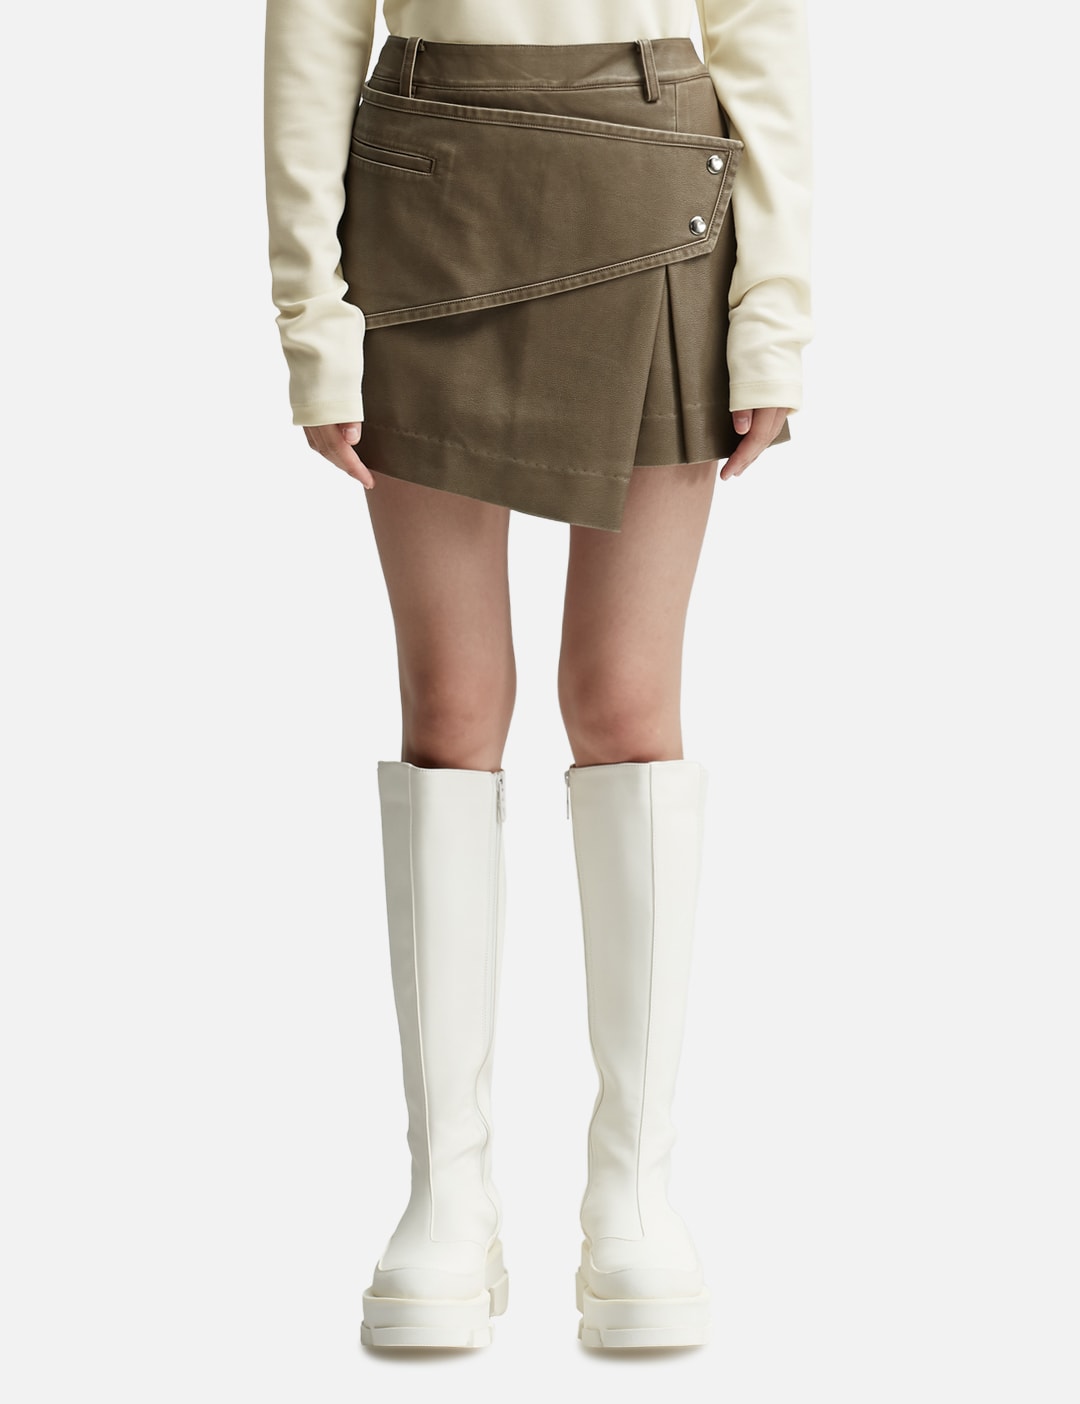 Brown Wrap Faux-Leather Miniskirt by Kijun on Sale